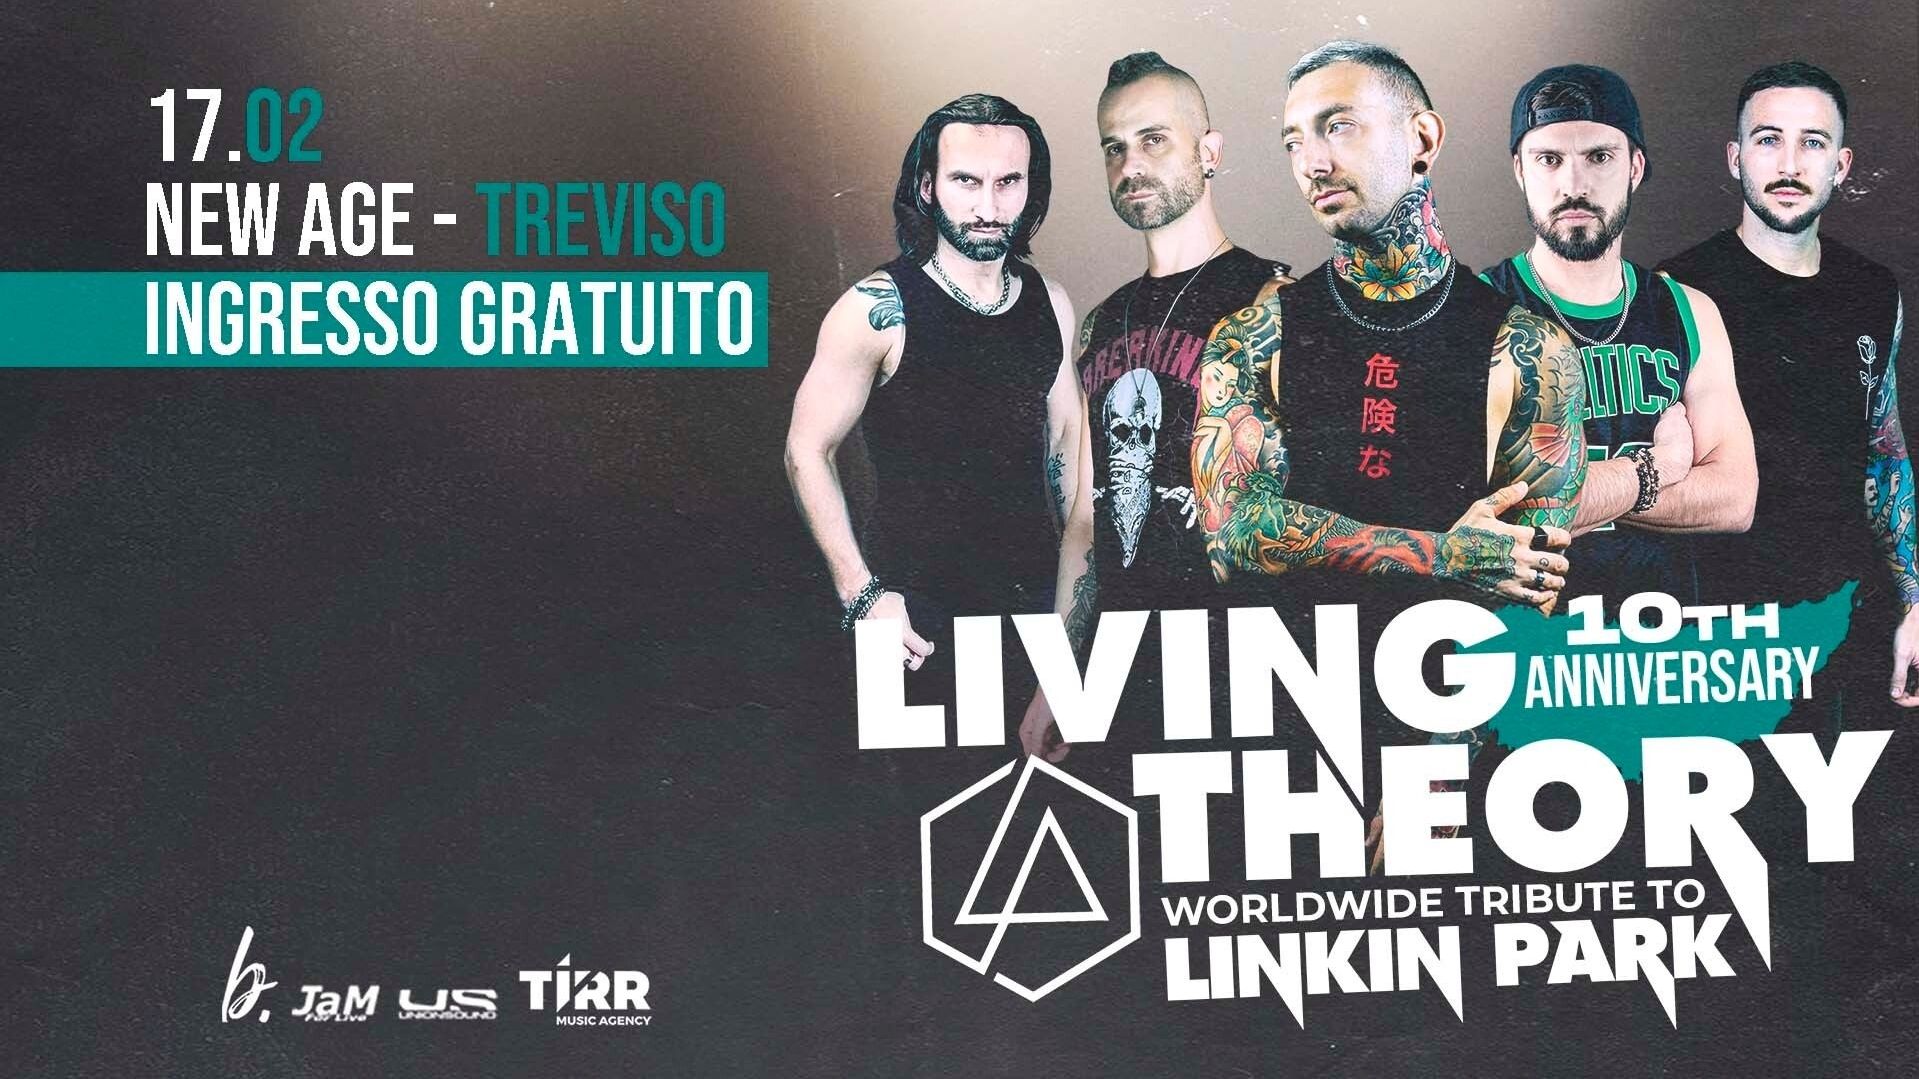 Living Theory - Worldwide Linkin Park tribute